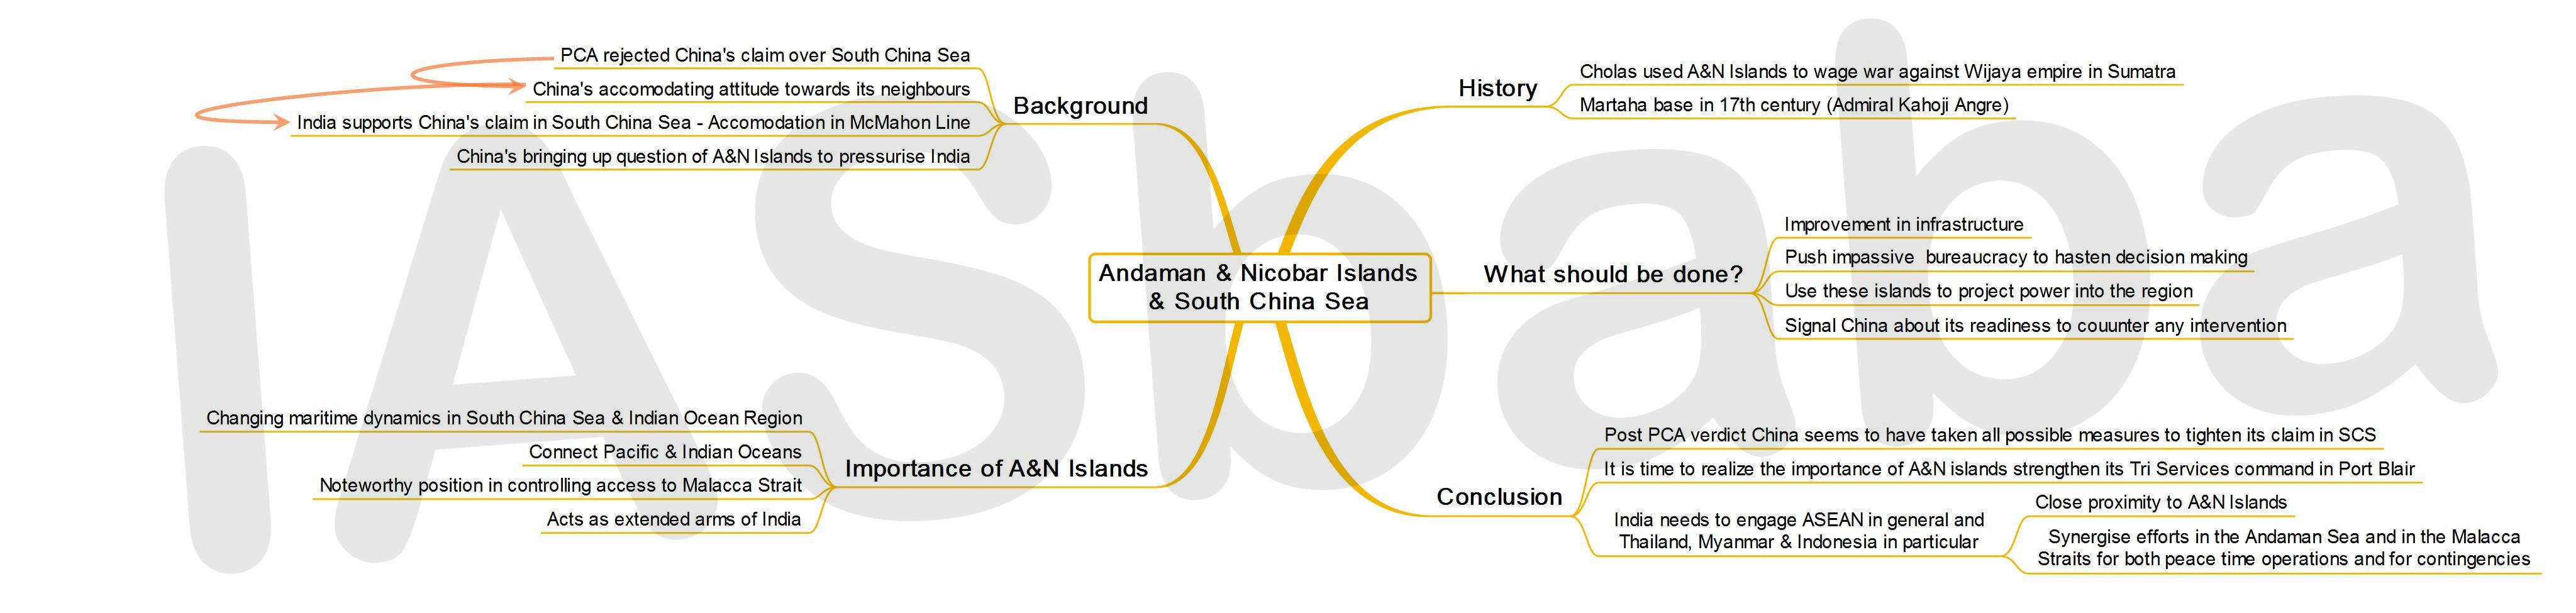 IASbaba’s MINDMAP : Issue - Andaman & Nicobar Islands and South China Sea